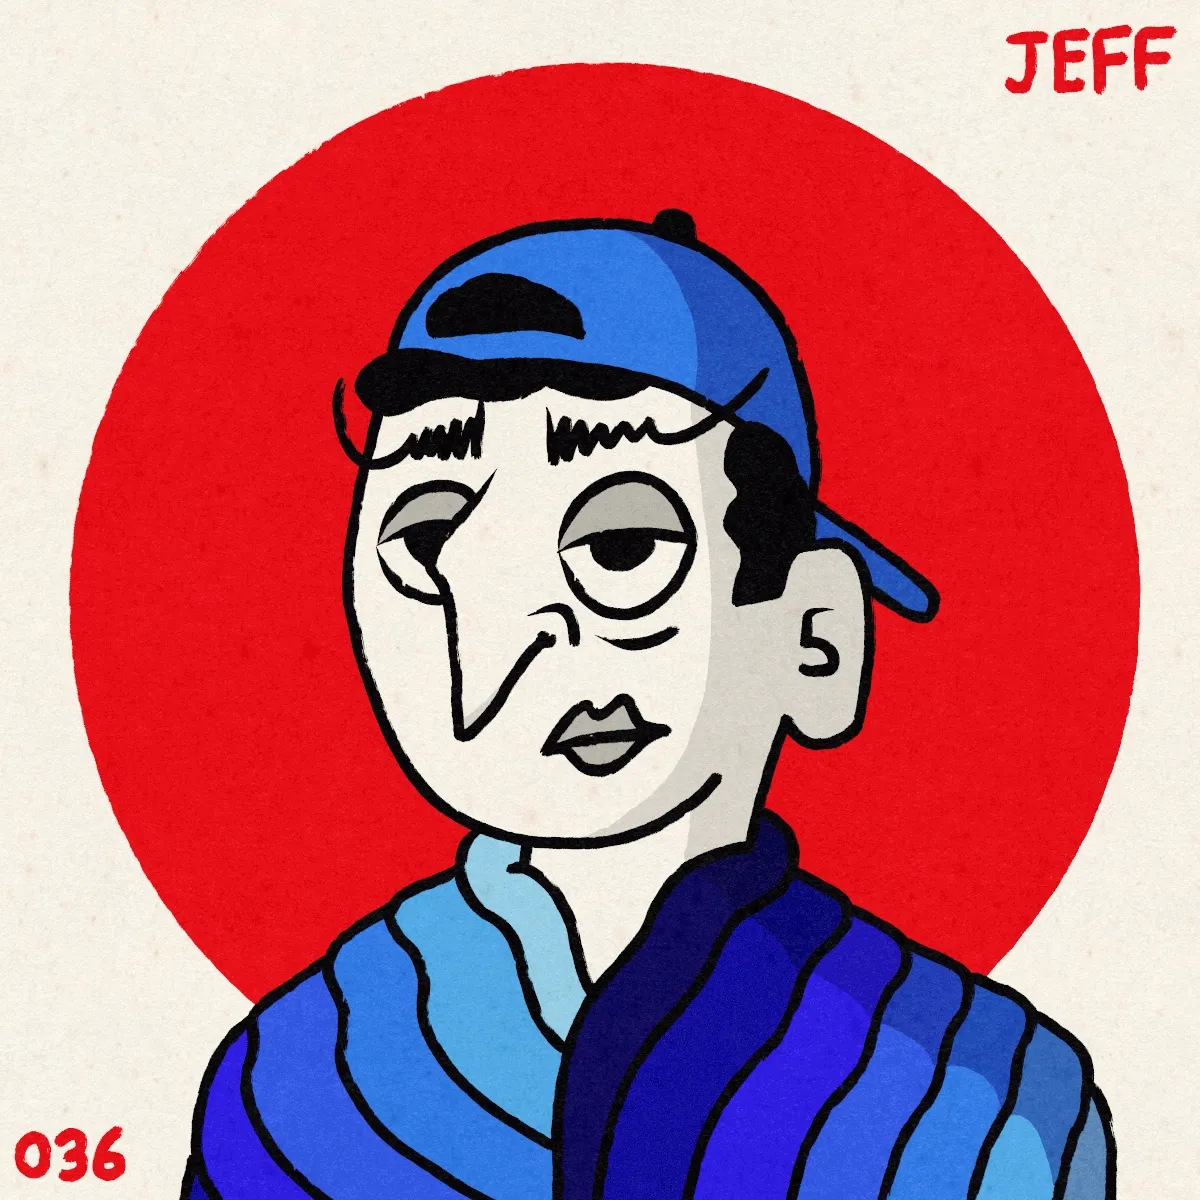 JEFF 036